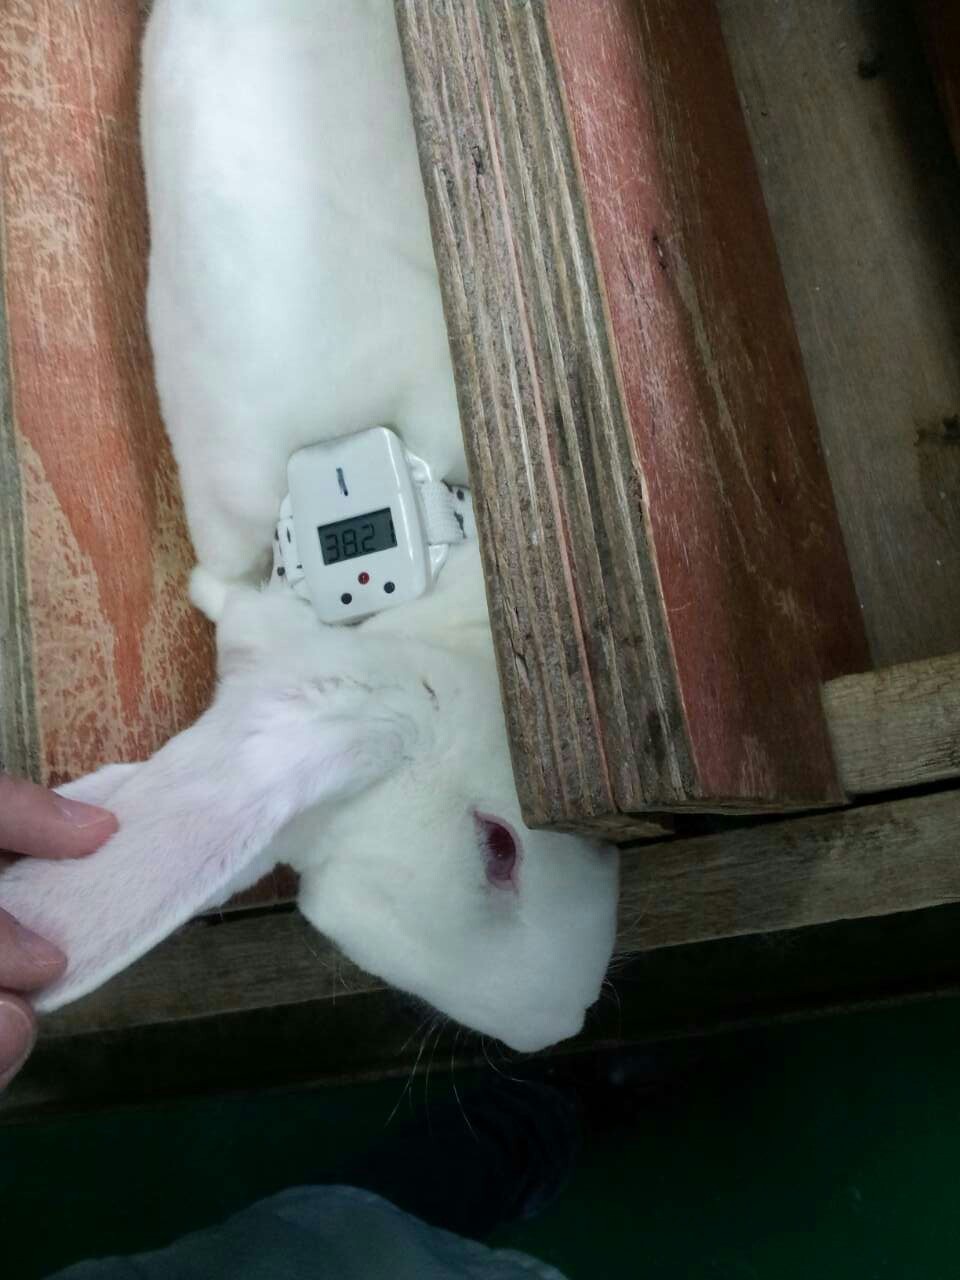  implants the temperature sensor into the Rex Rabbit body